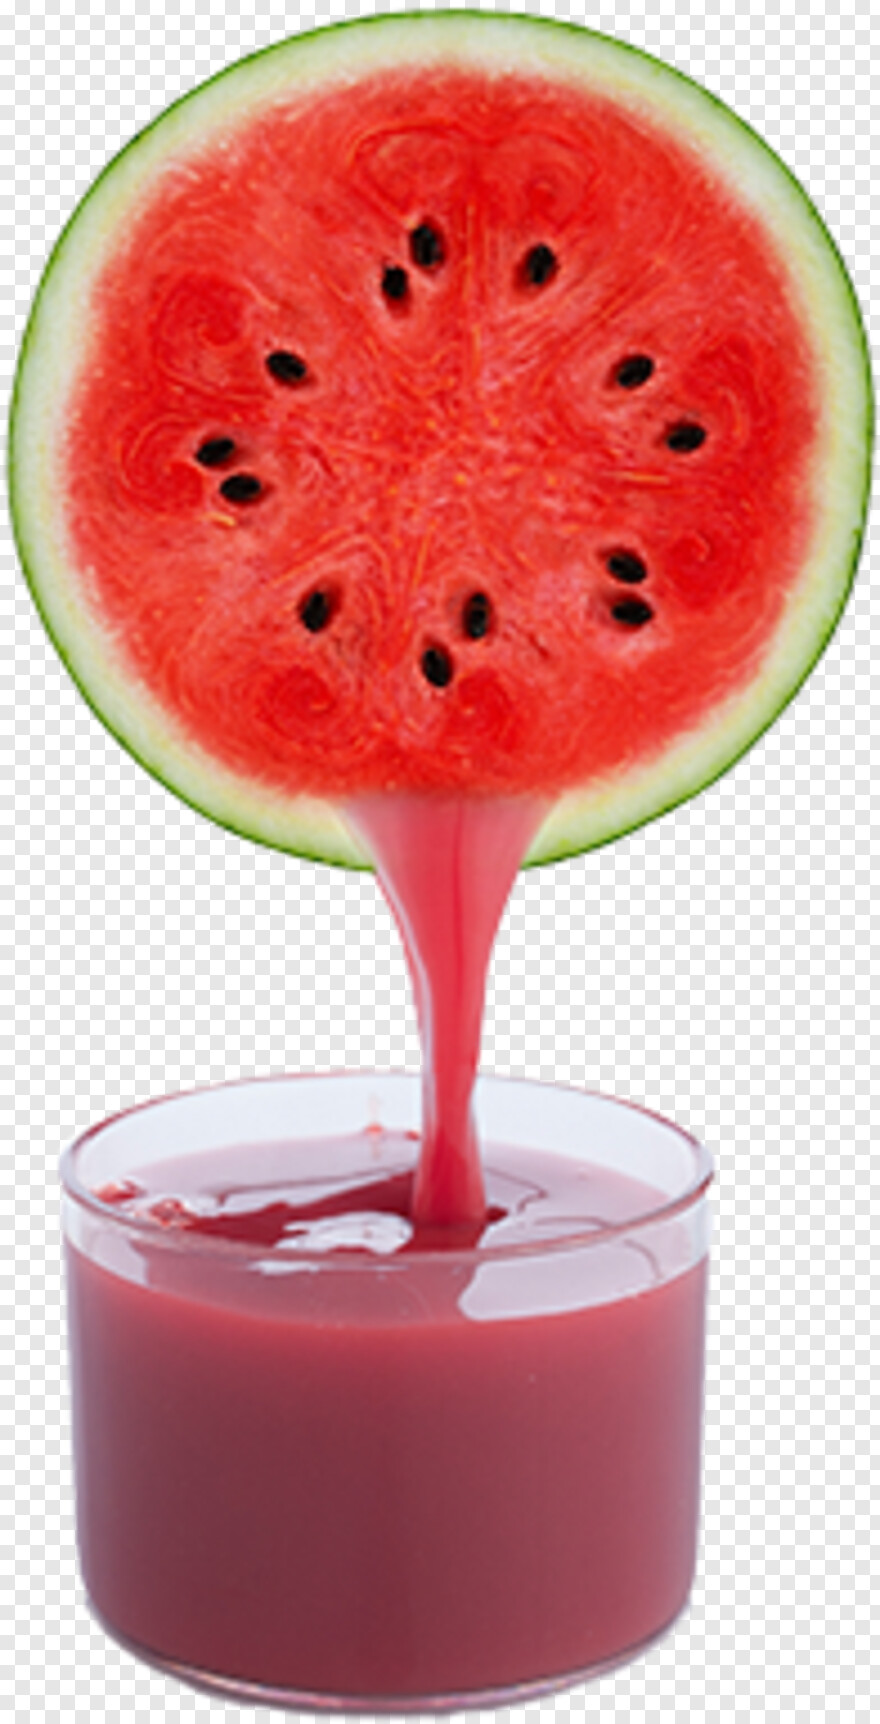 watermelon # 968005